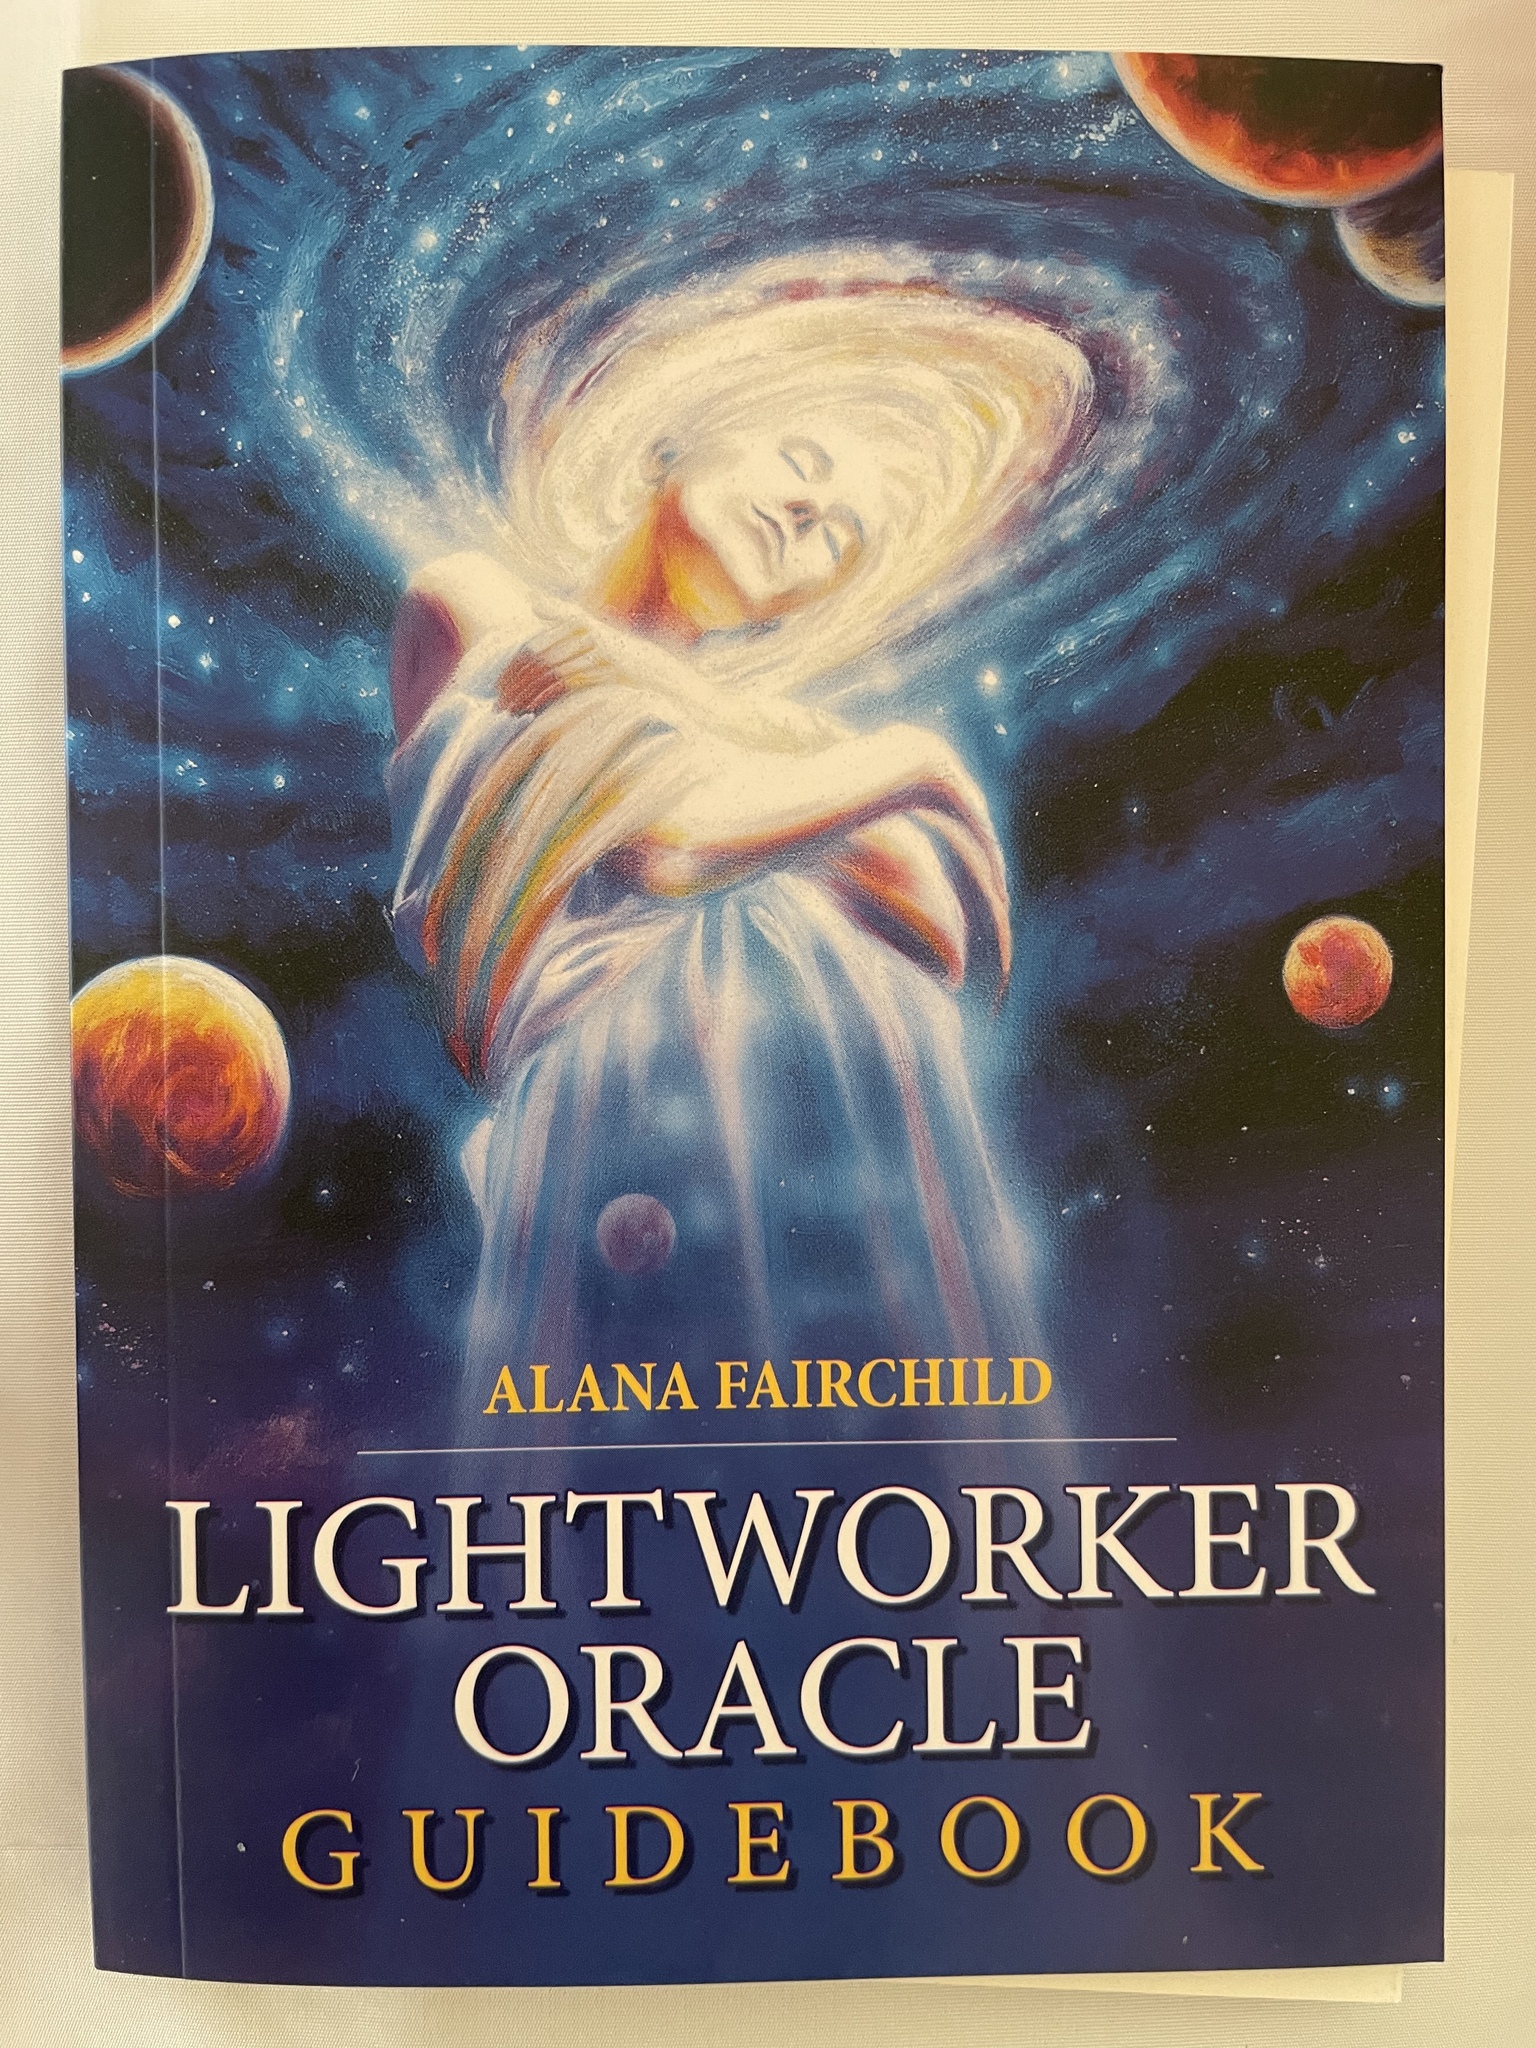 Lightworker Oracle (engelsk text)